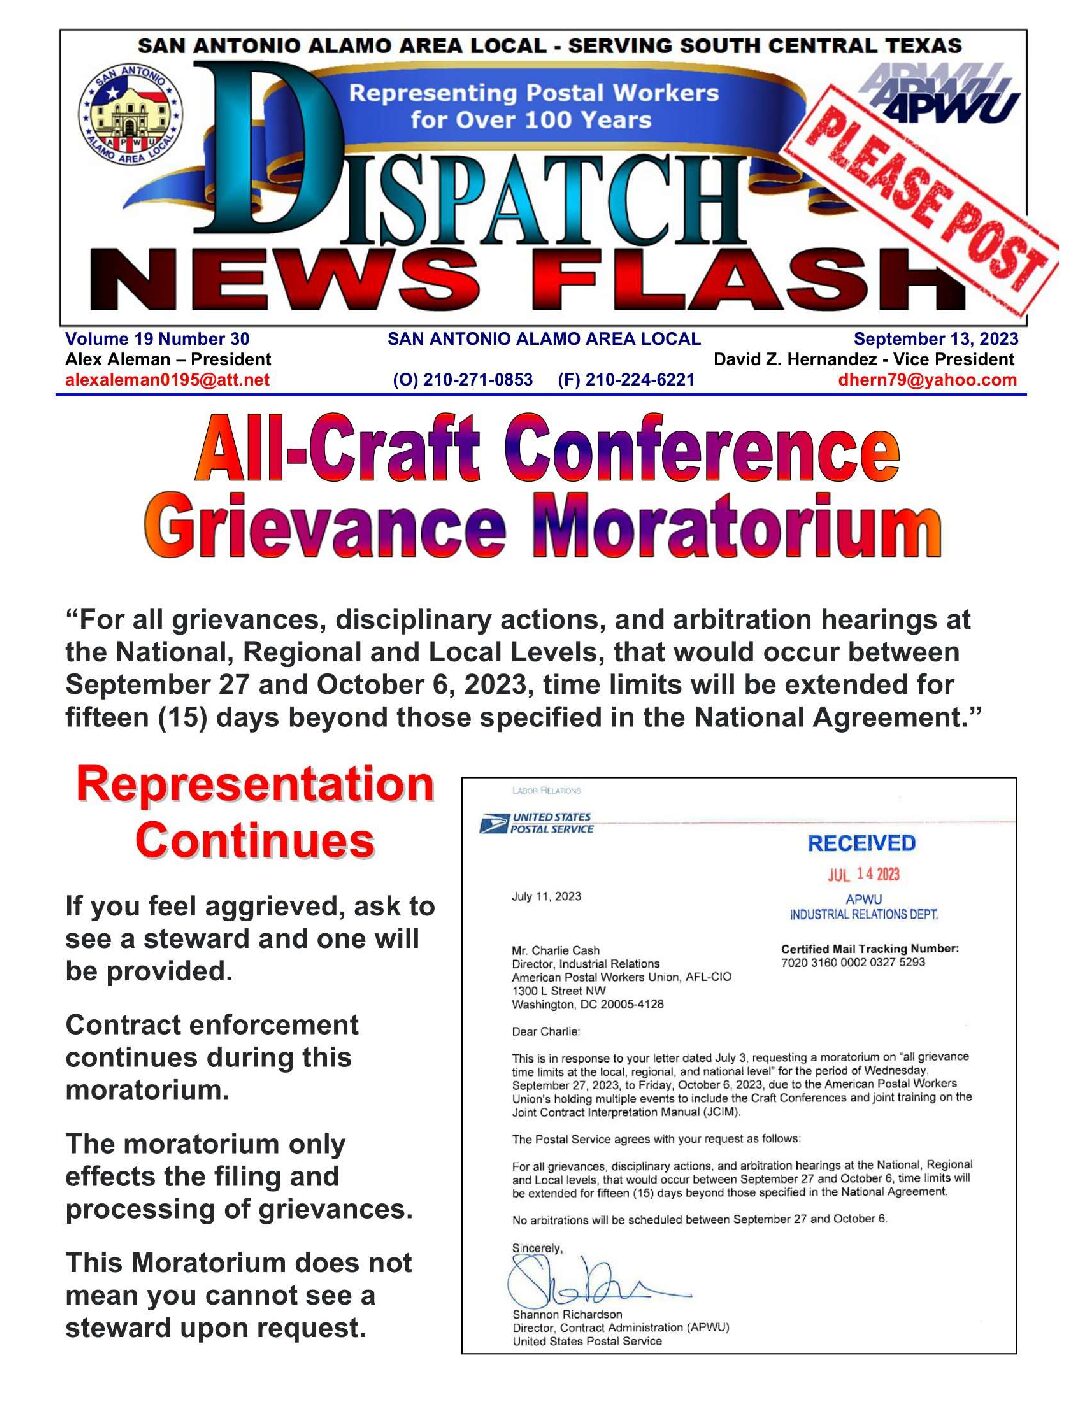 NewsFlash 19-30 All Craft Conference Grievance Moratorium - 